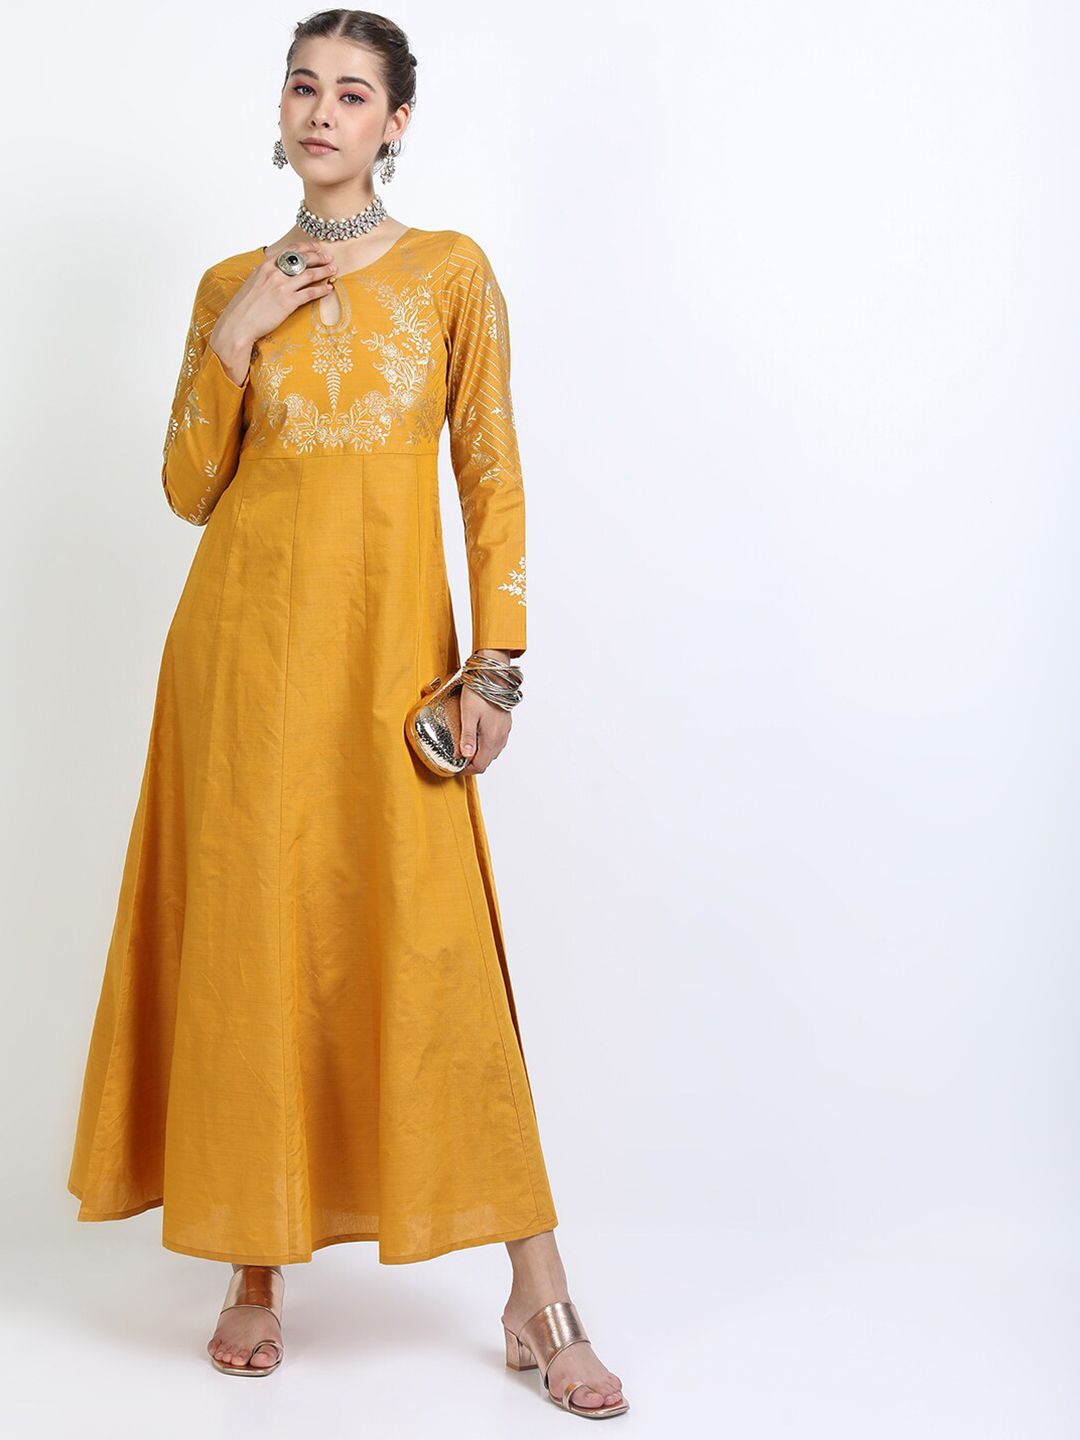 Vishudh Yellow Ethnic Maxi Dress Price in India